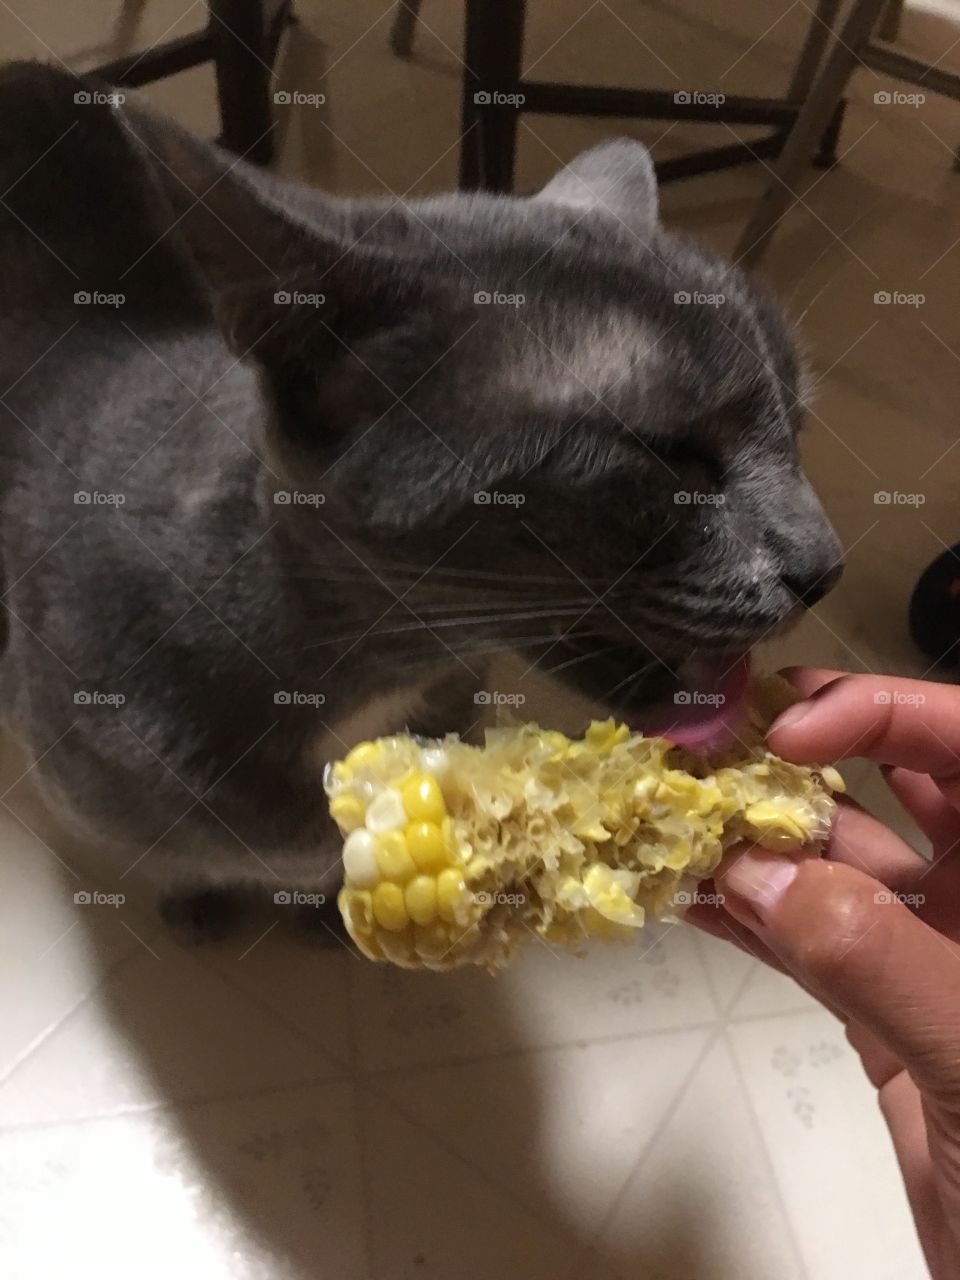 Eating corn 